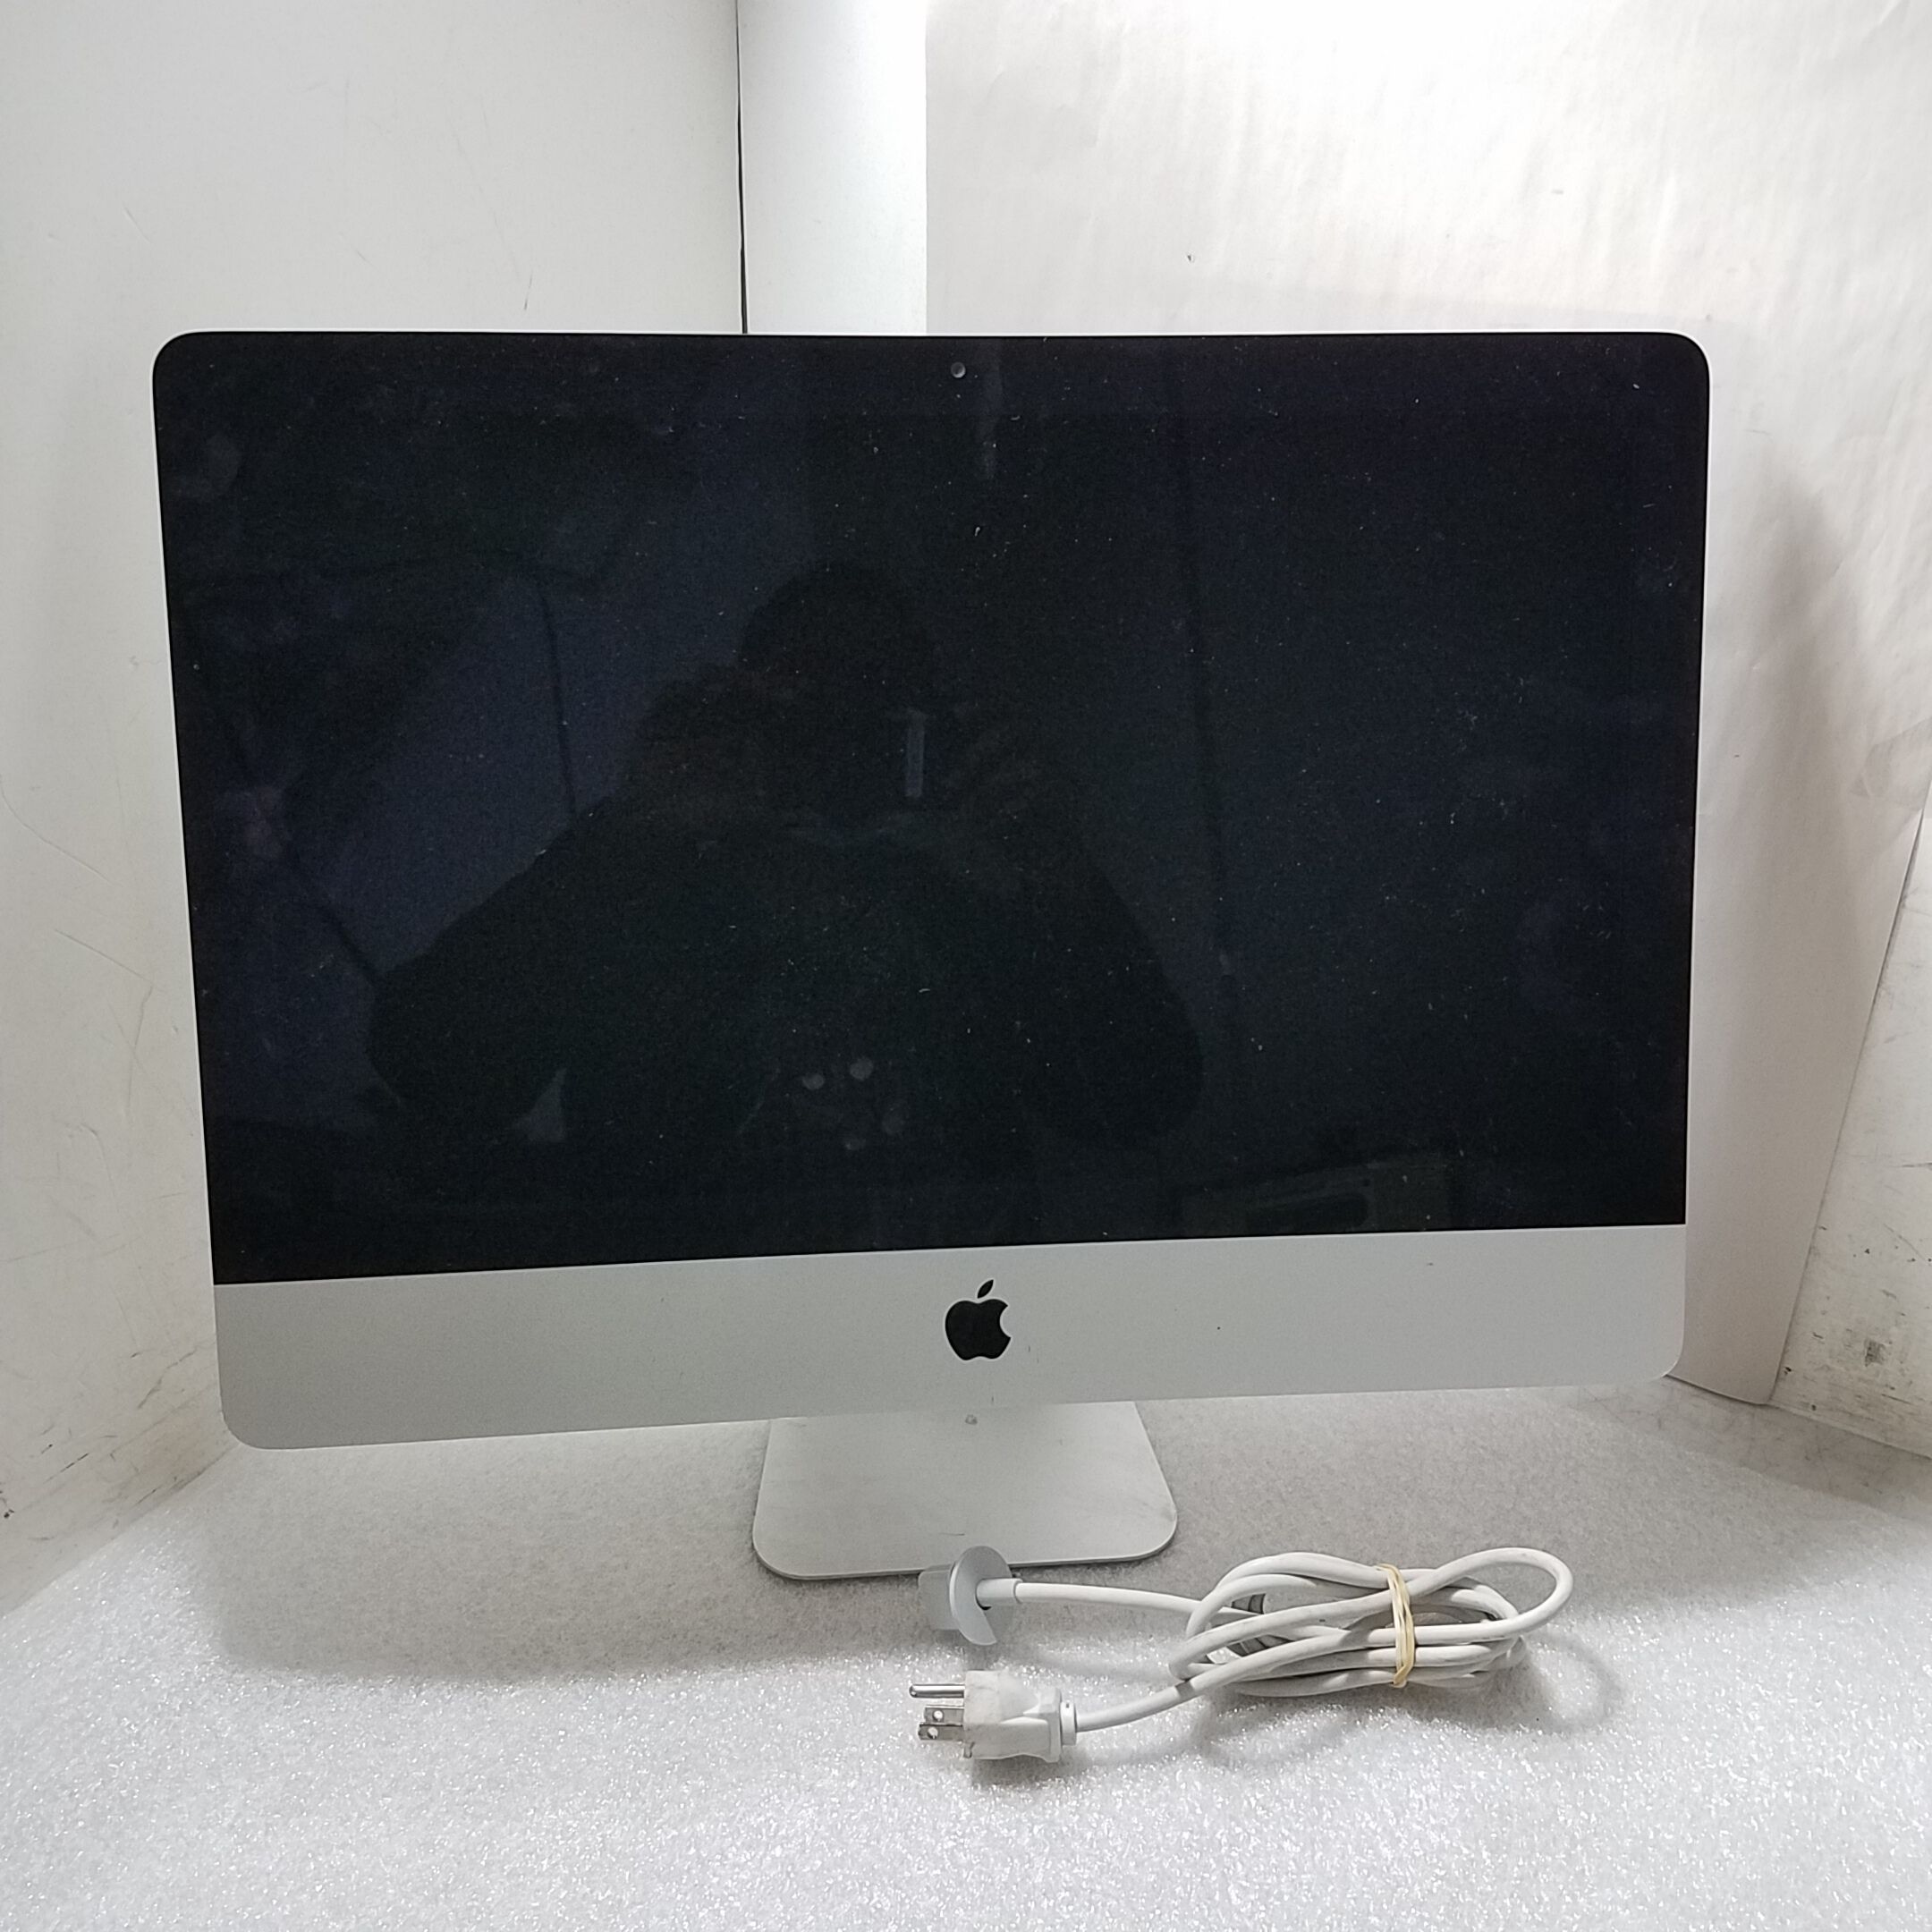 Buy the Apple iMac 21.5-Inch Core i5 2.7 (Late 2012) Storage 1TB